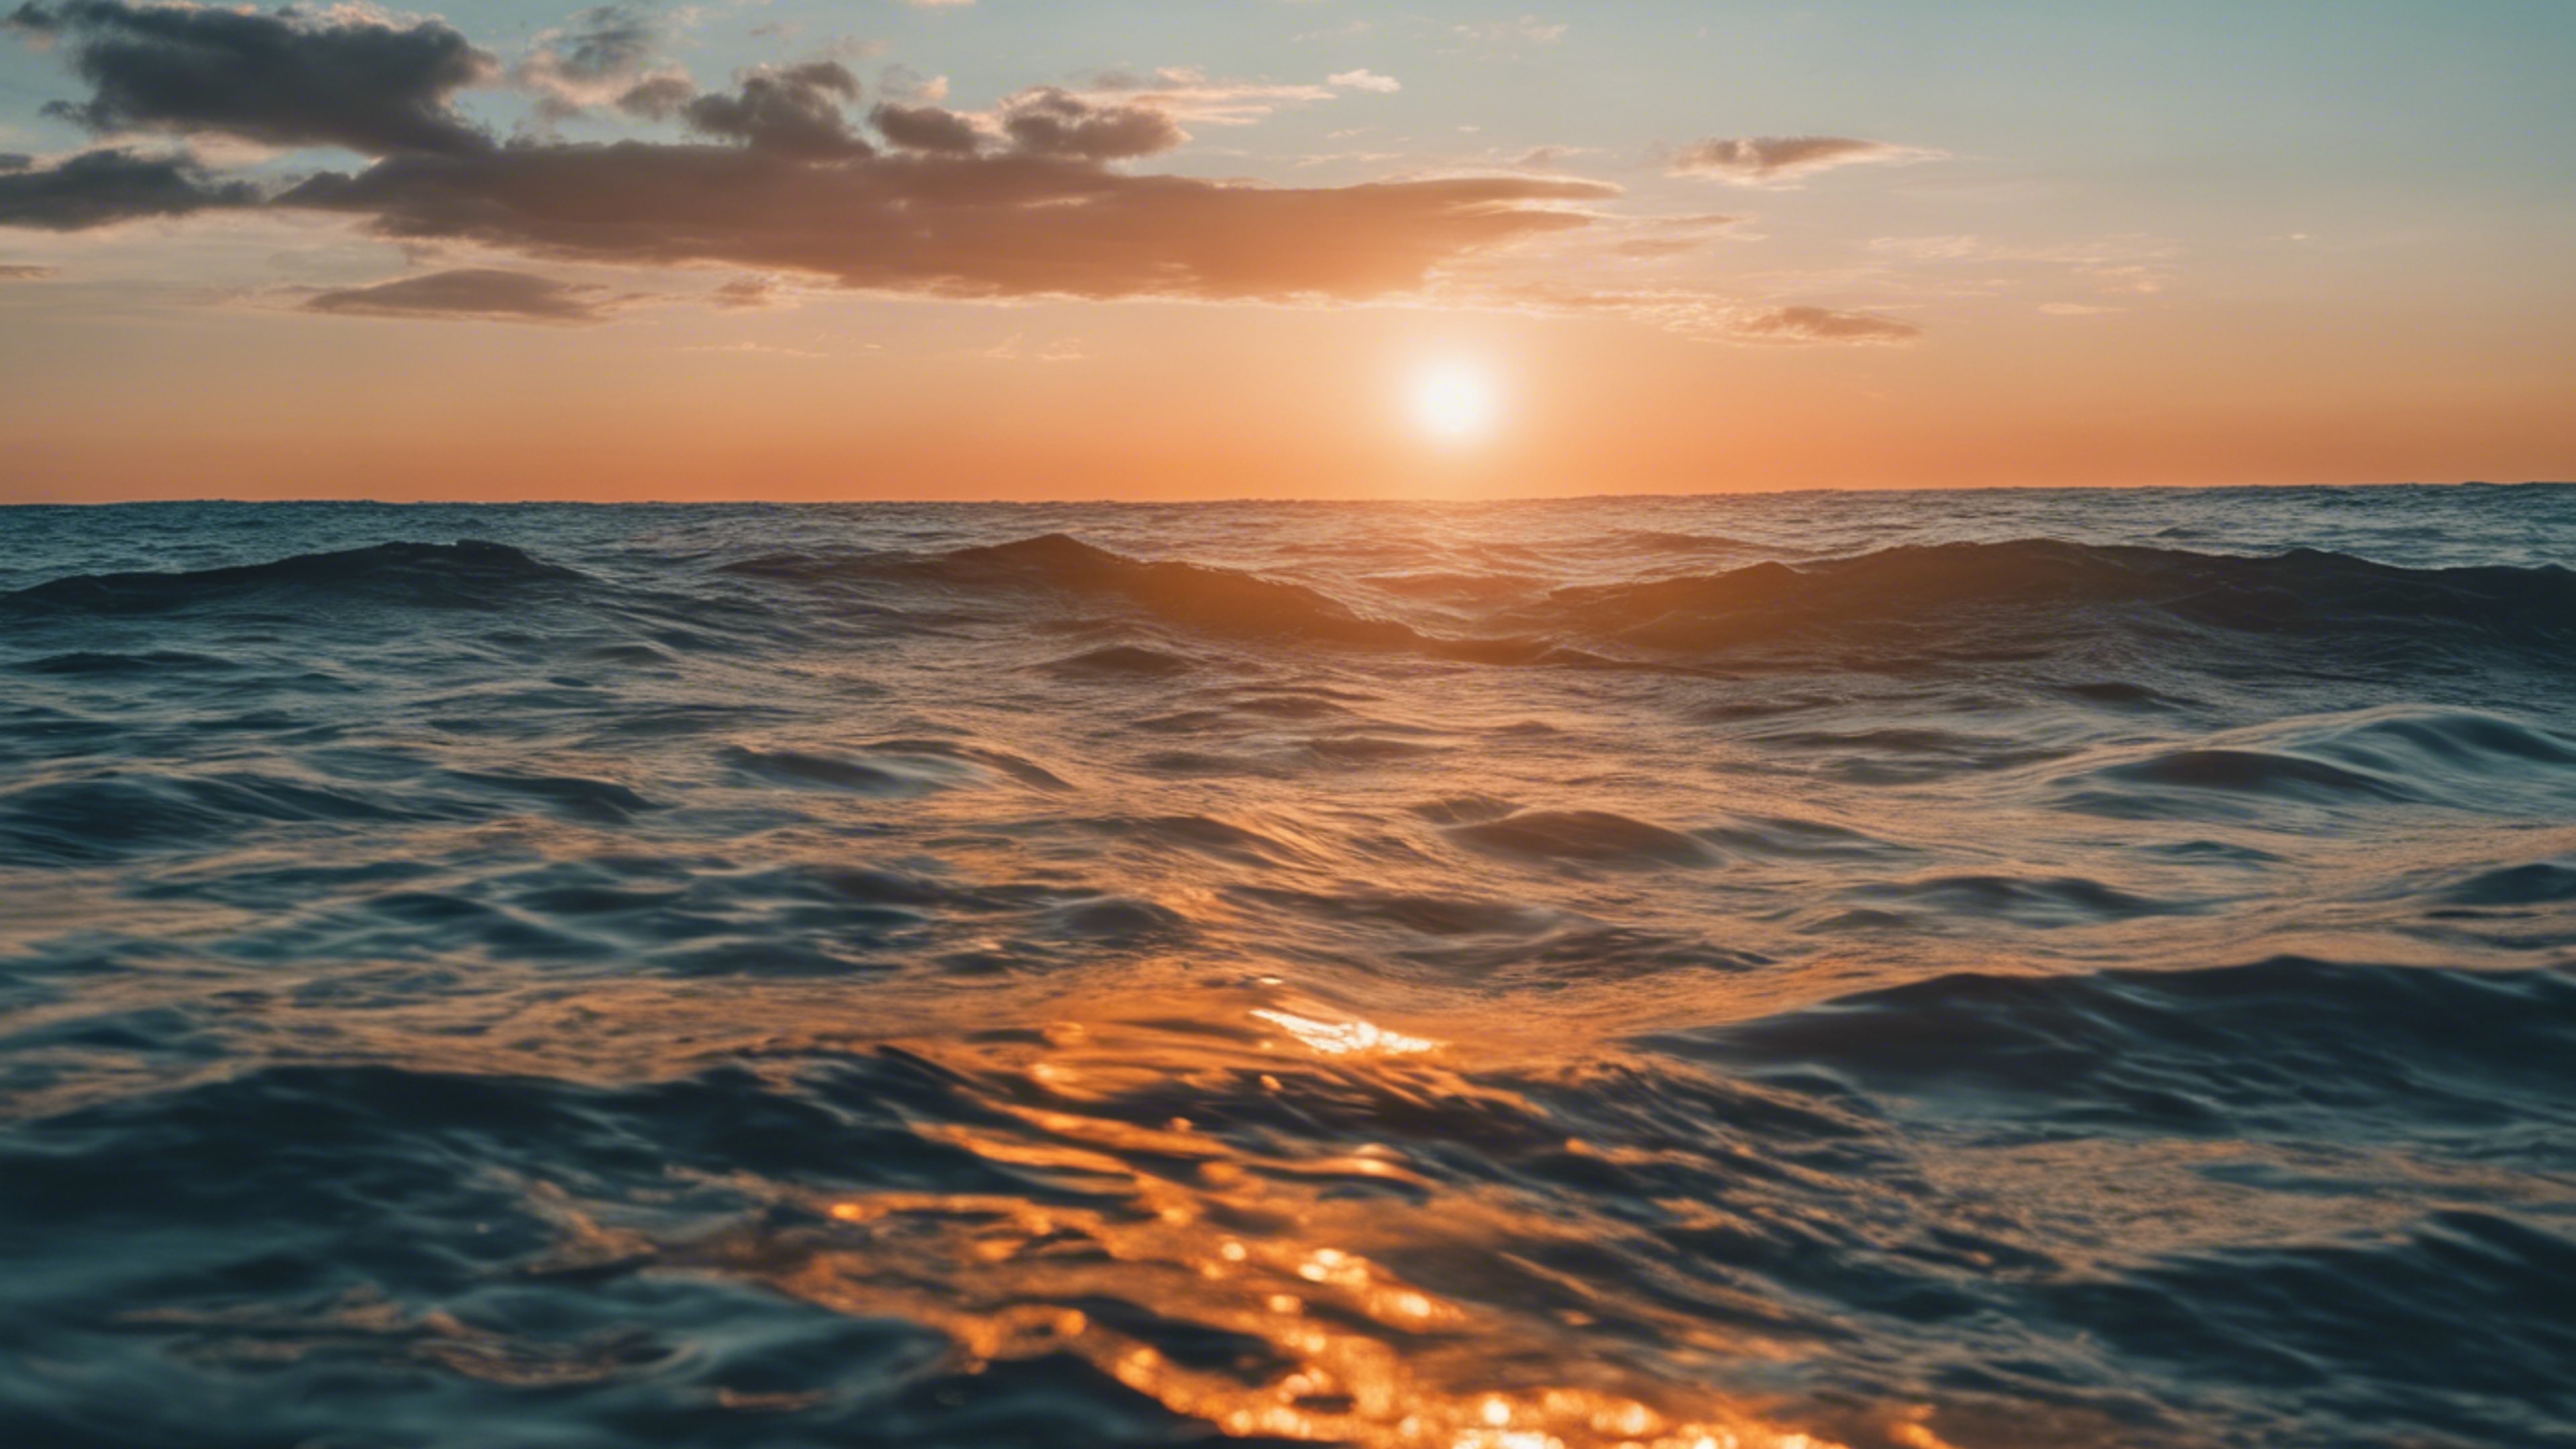 A sunset scene with orange sun setting in the cool blue ocean. Fondo de pantalla[7965154be6e2421b8d94]